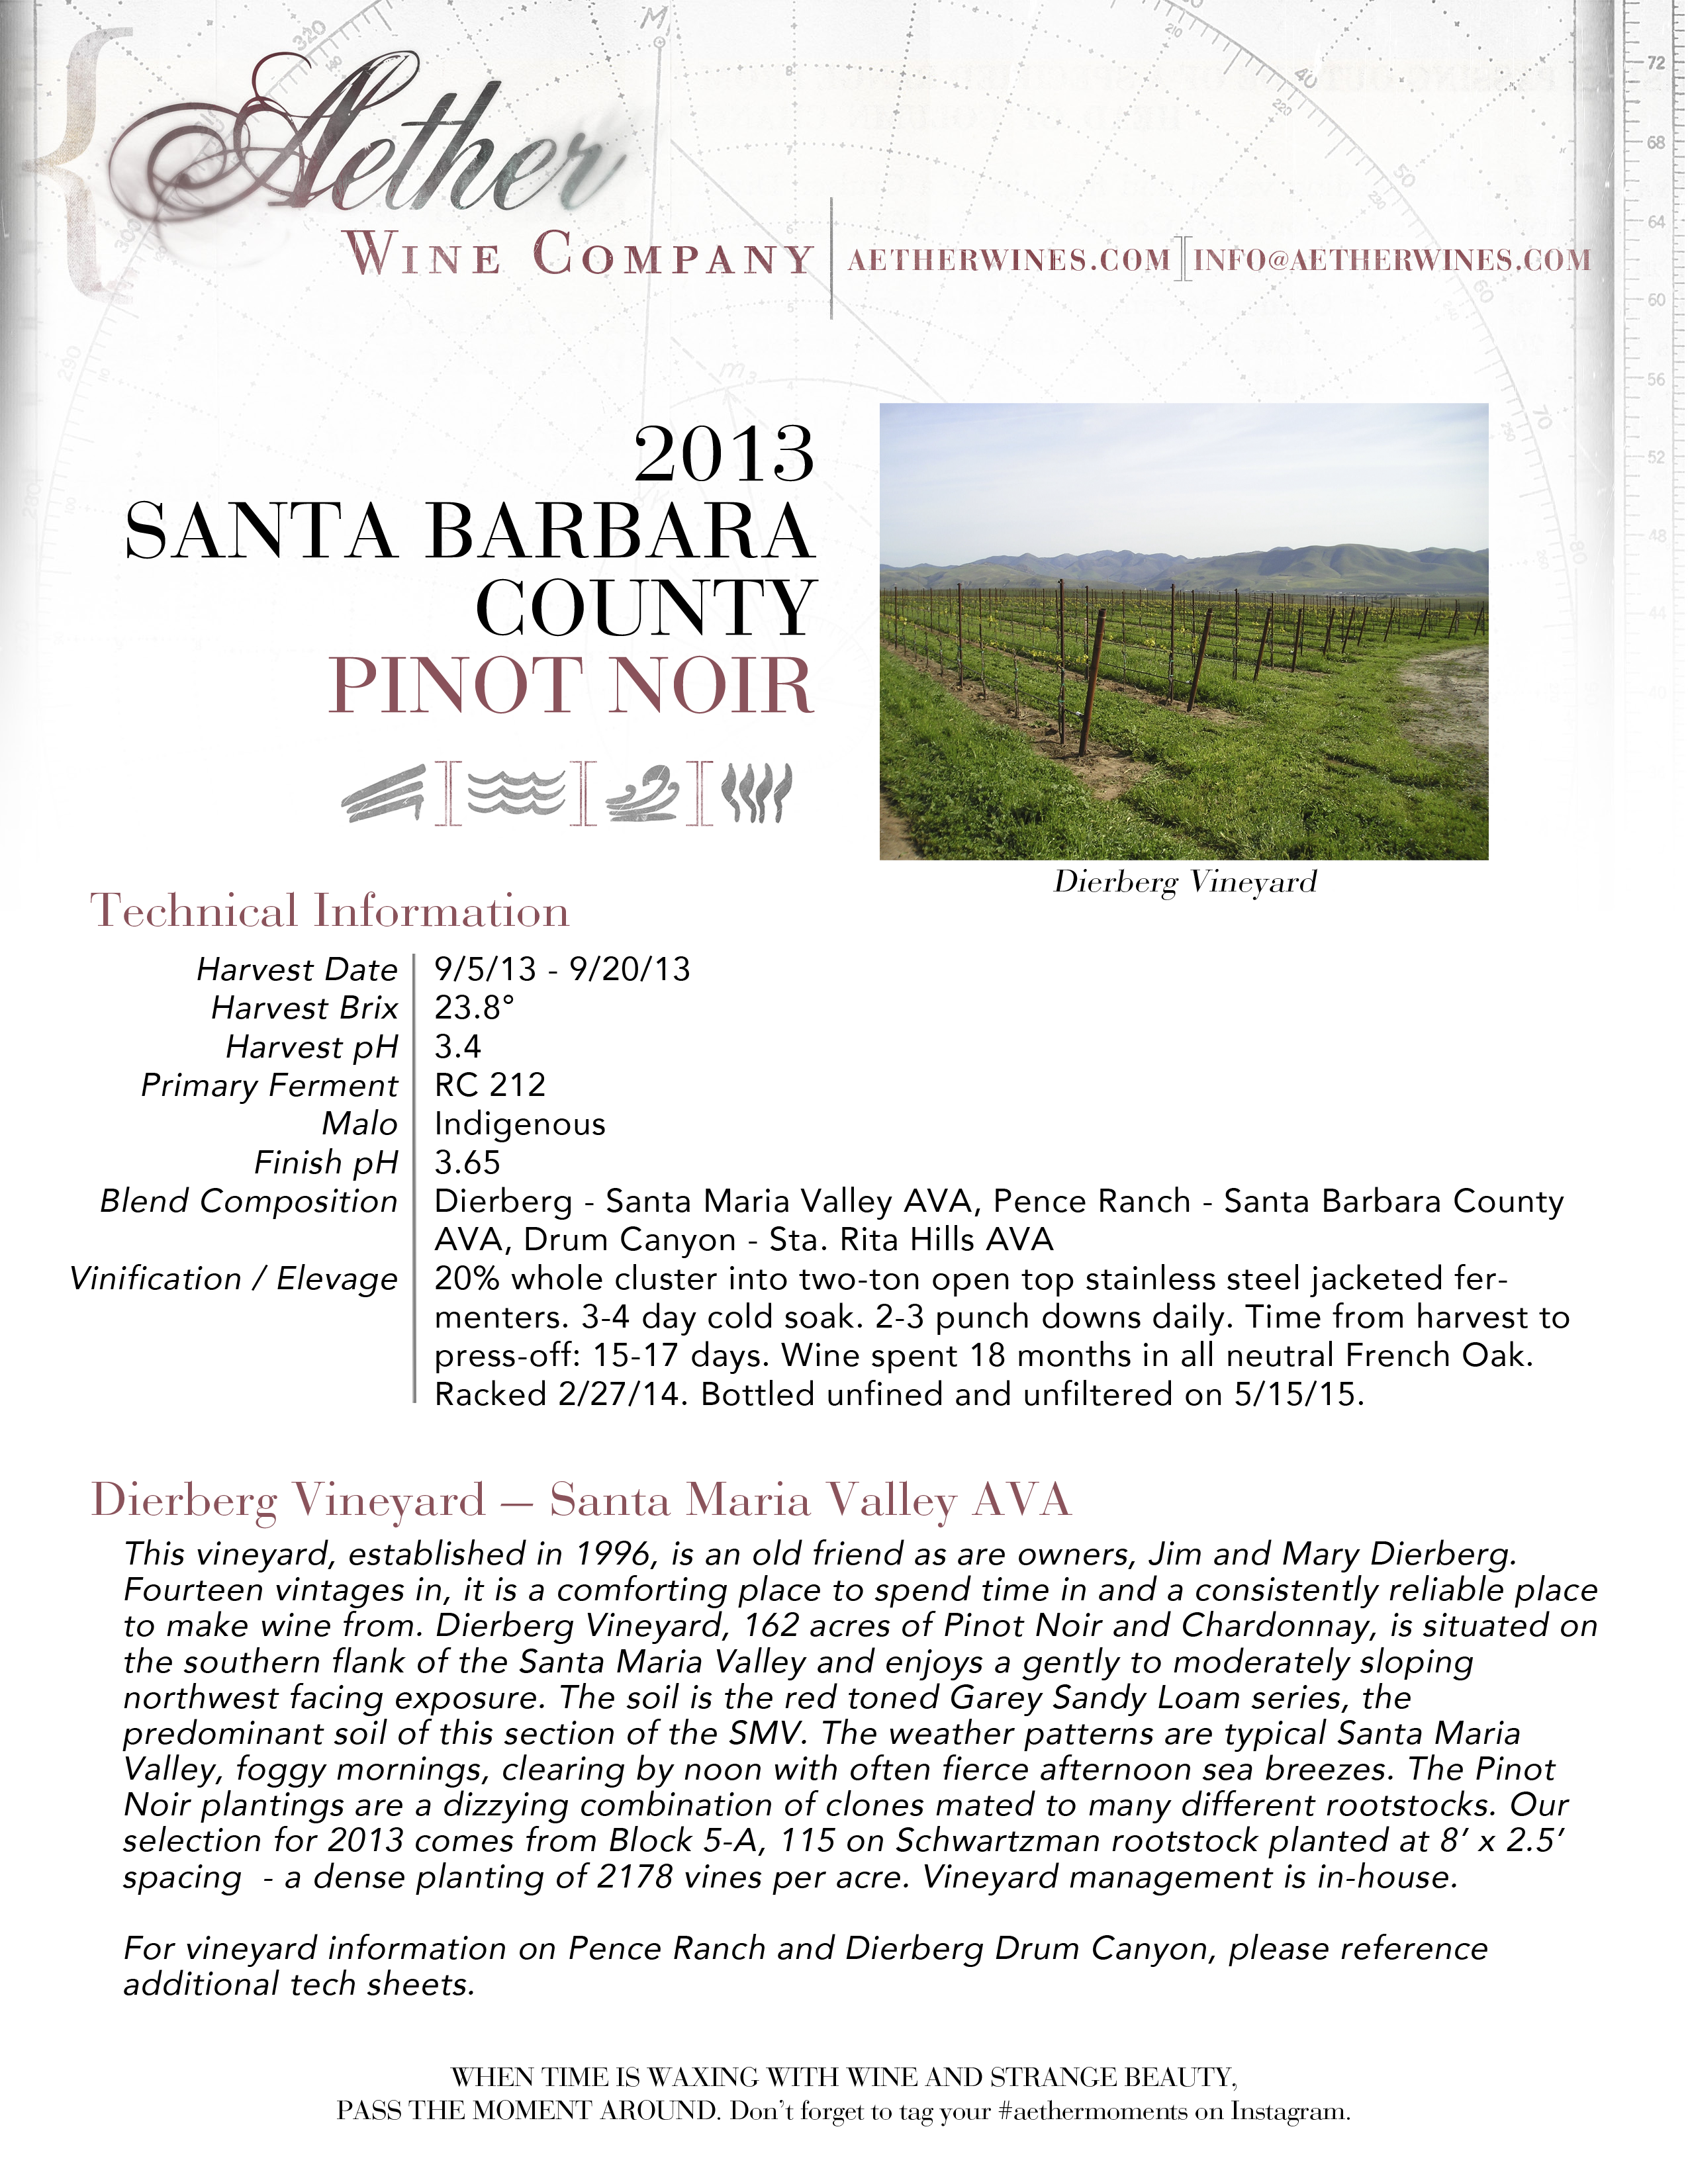 2013 Aether Santa Barbara Count Pinot Noir Tech Sheet